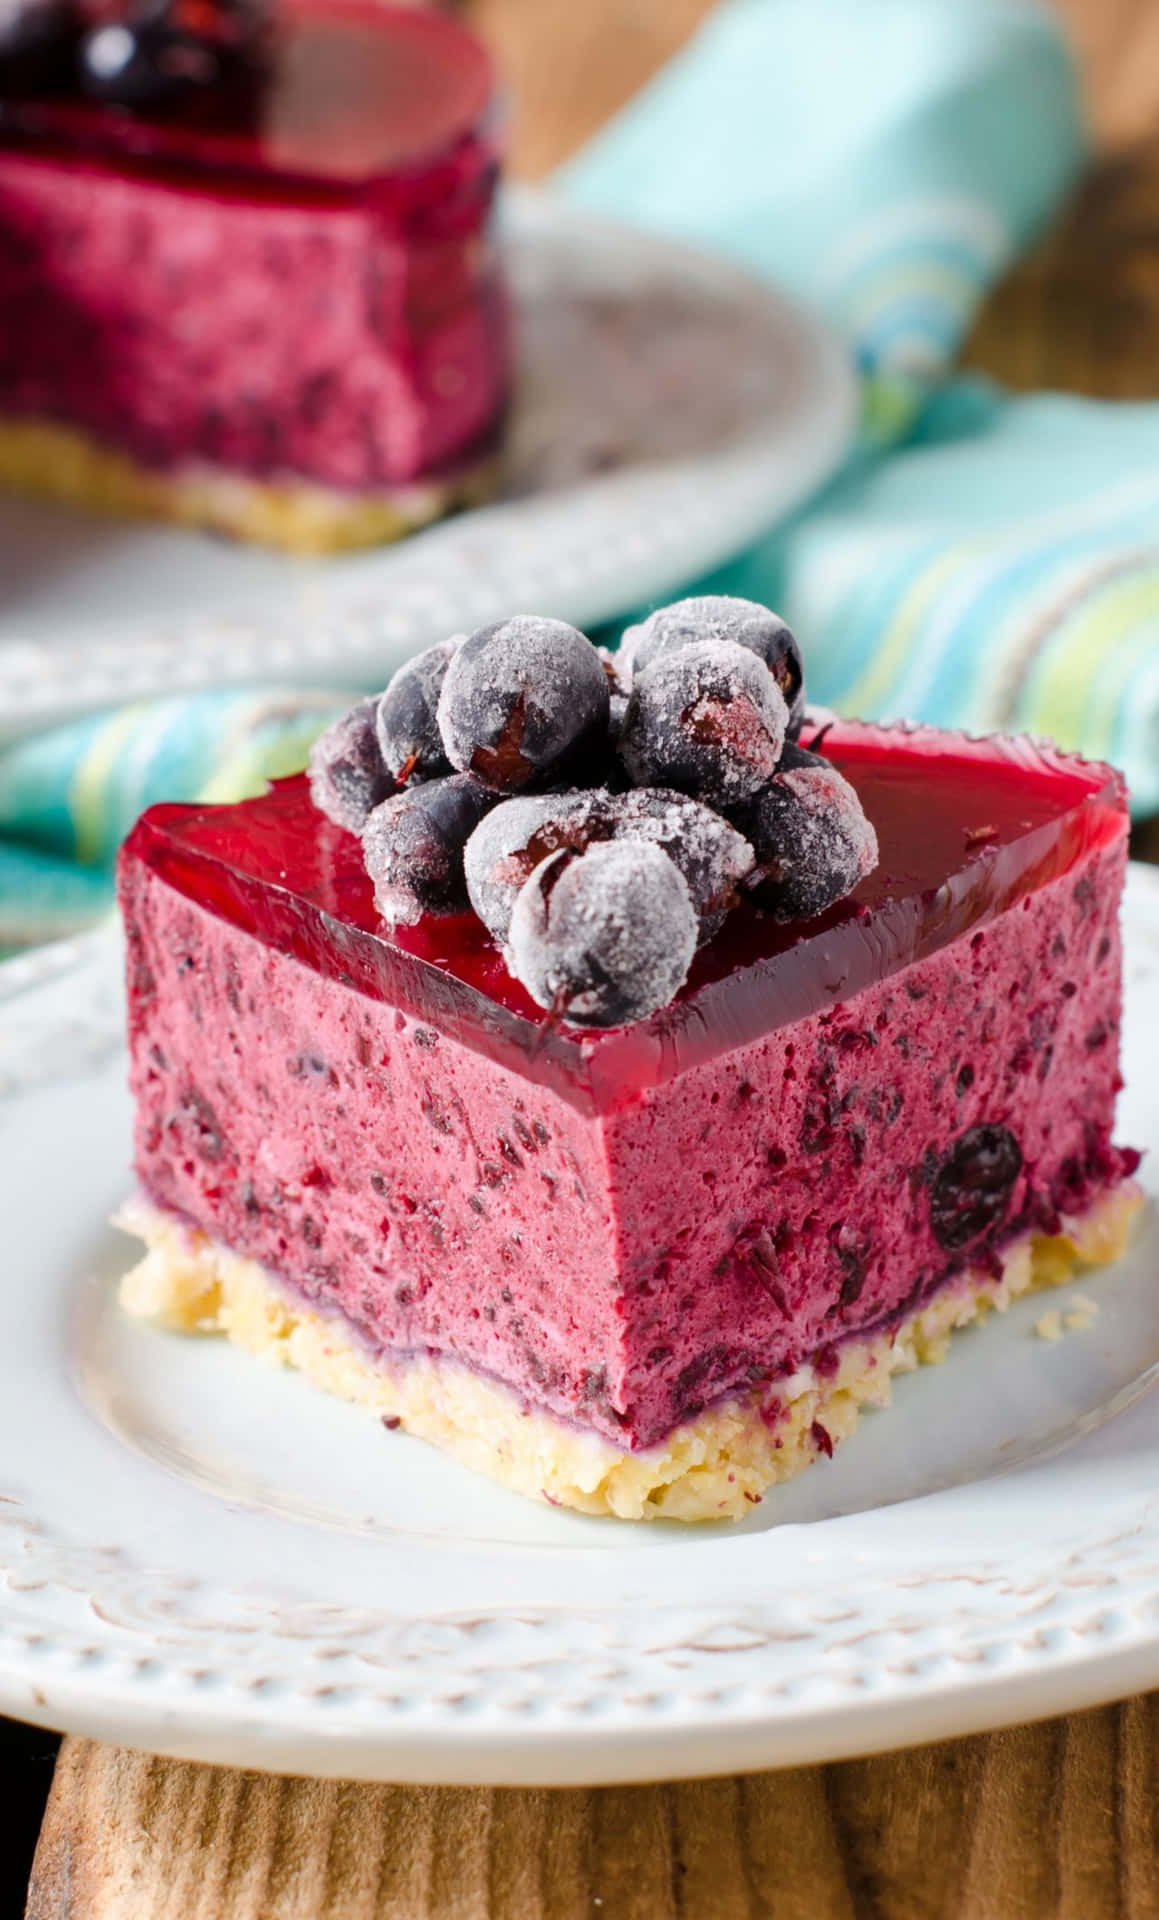 Enjoy the delicious cherry tart on your Dessert Iphone Wallpaper